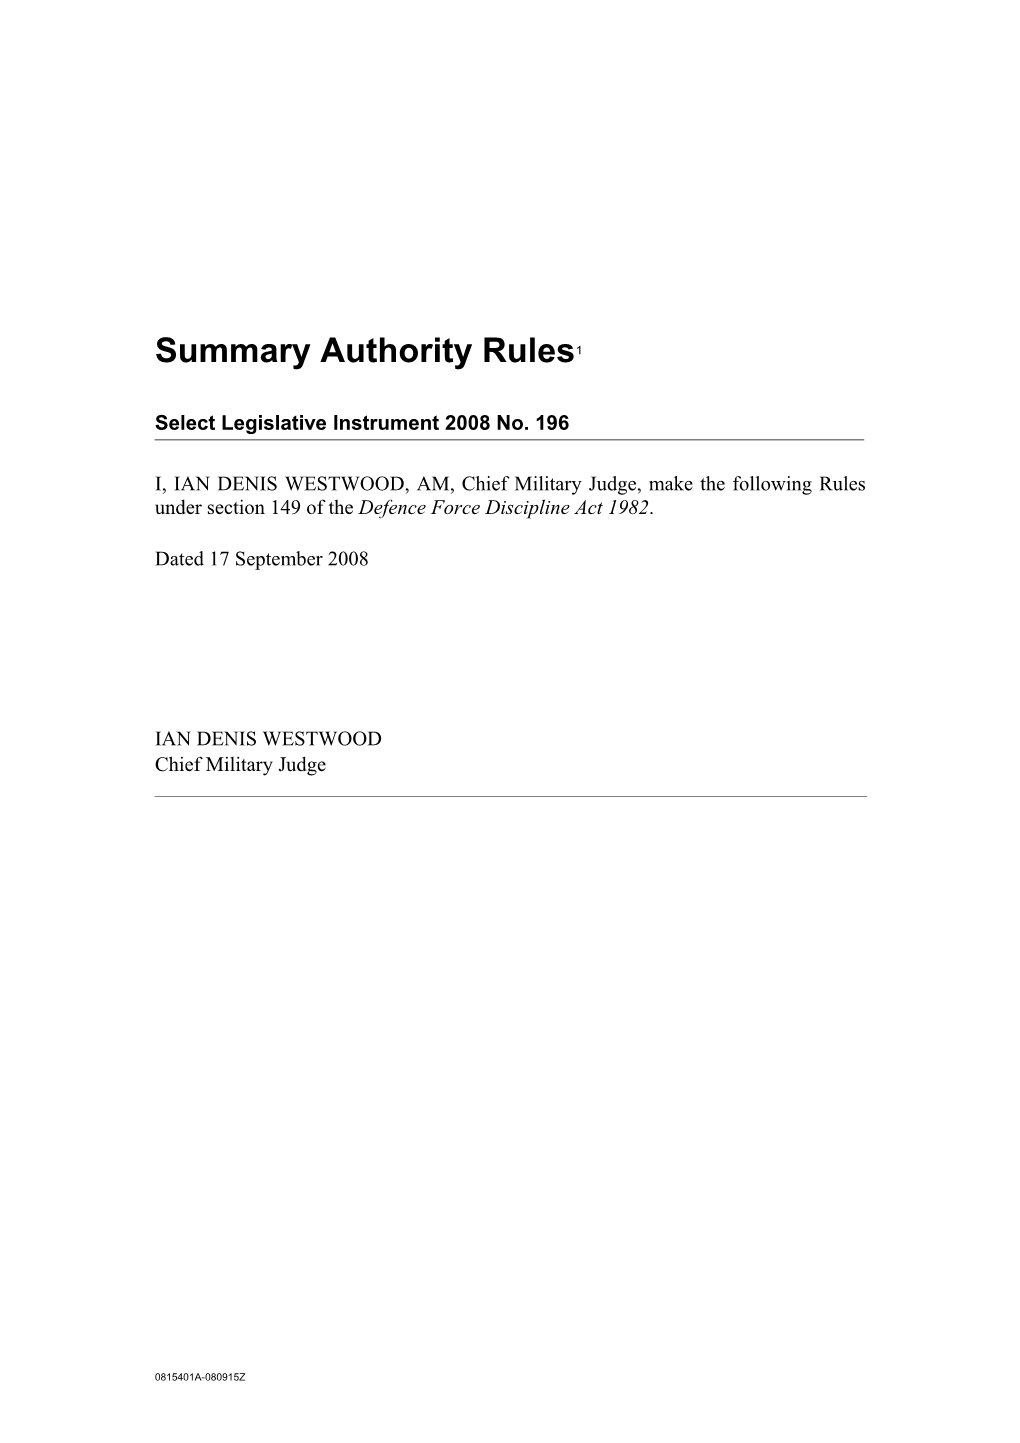 Summary Authority Rules 2008